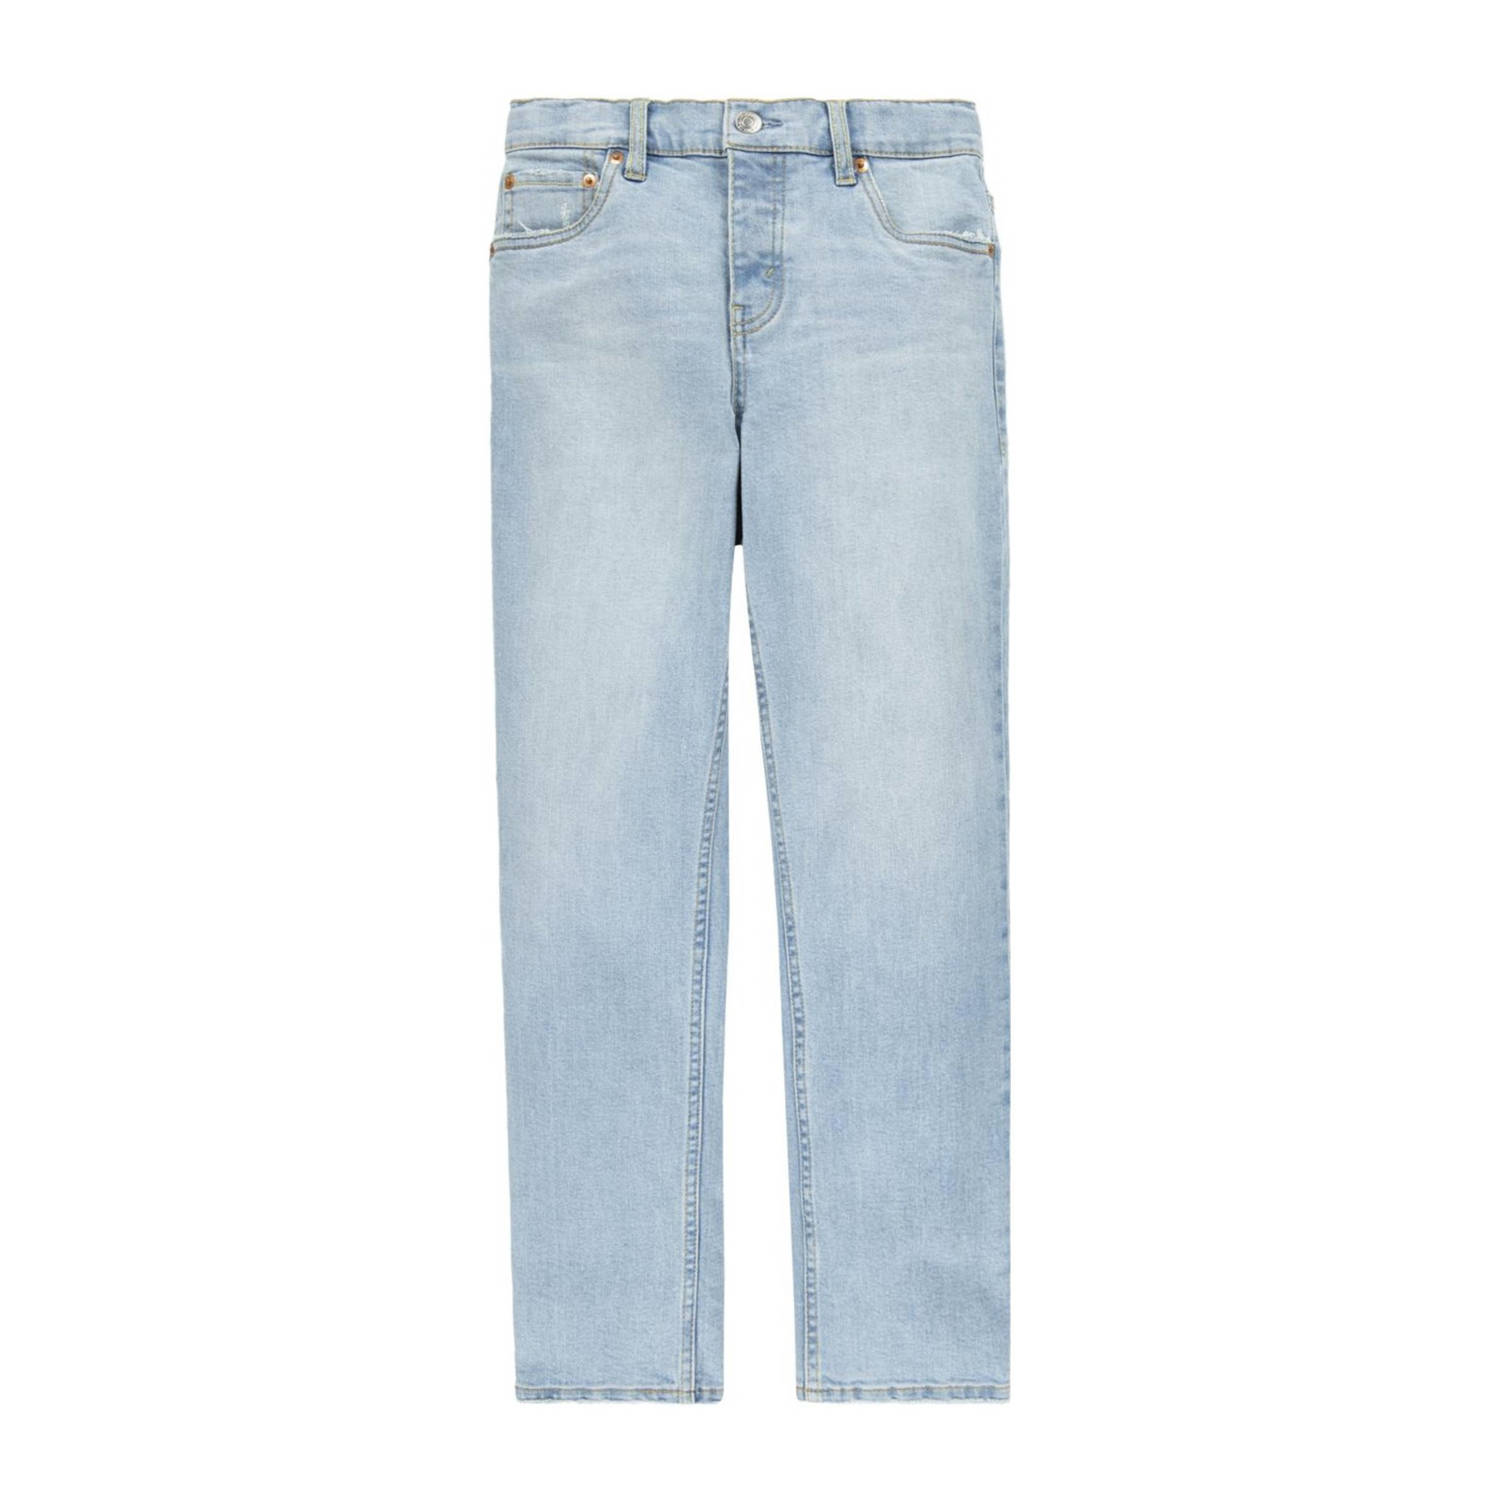 Levi's Kids 501 ORIGINAL regular fit jeans luxor last